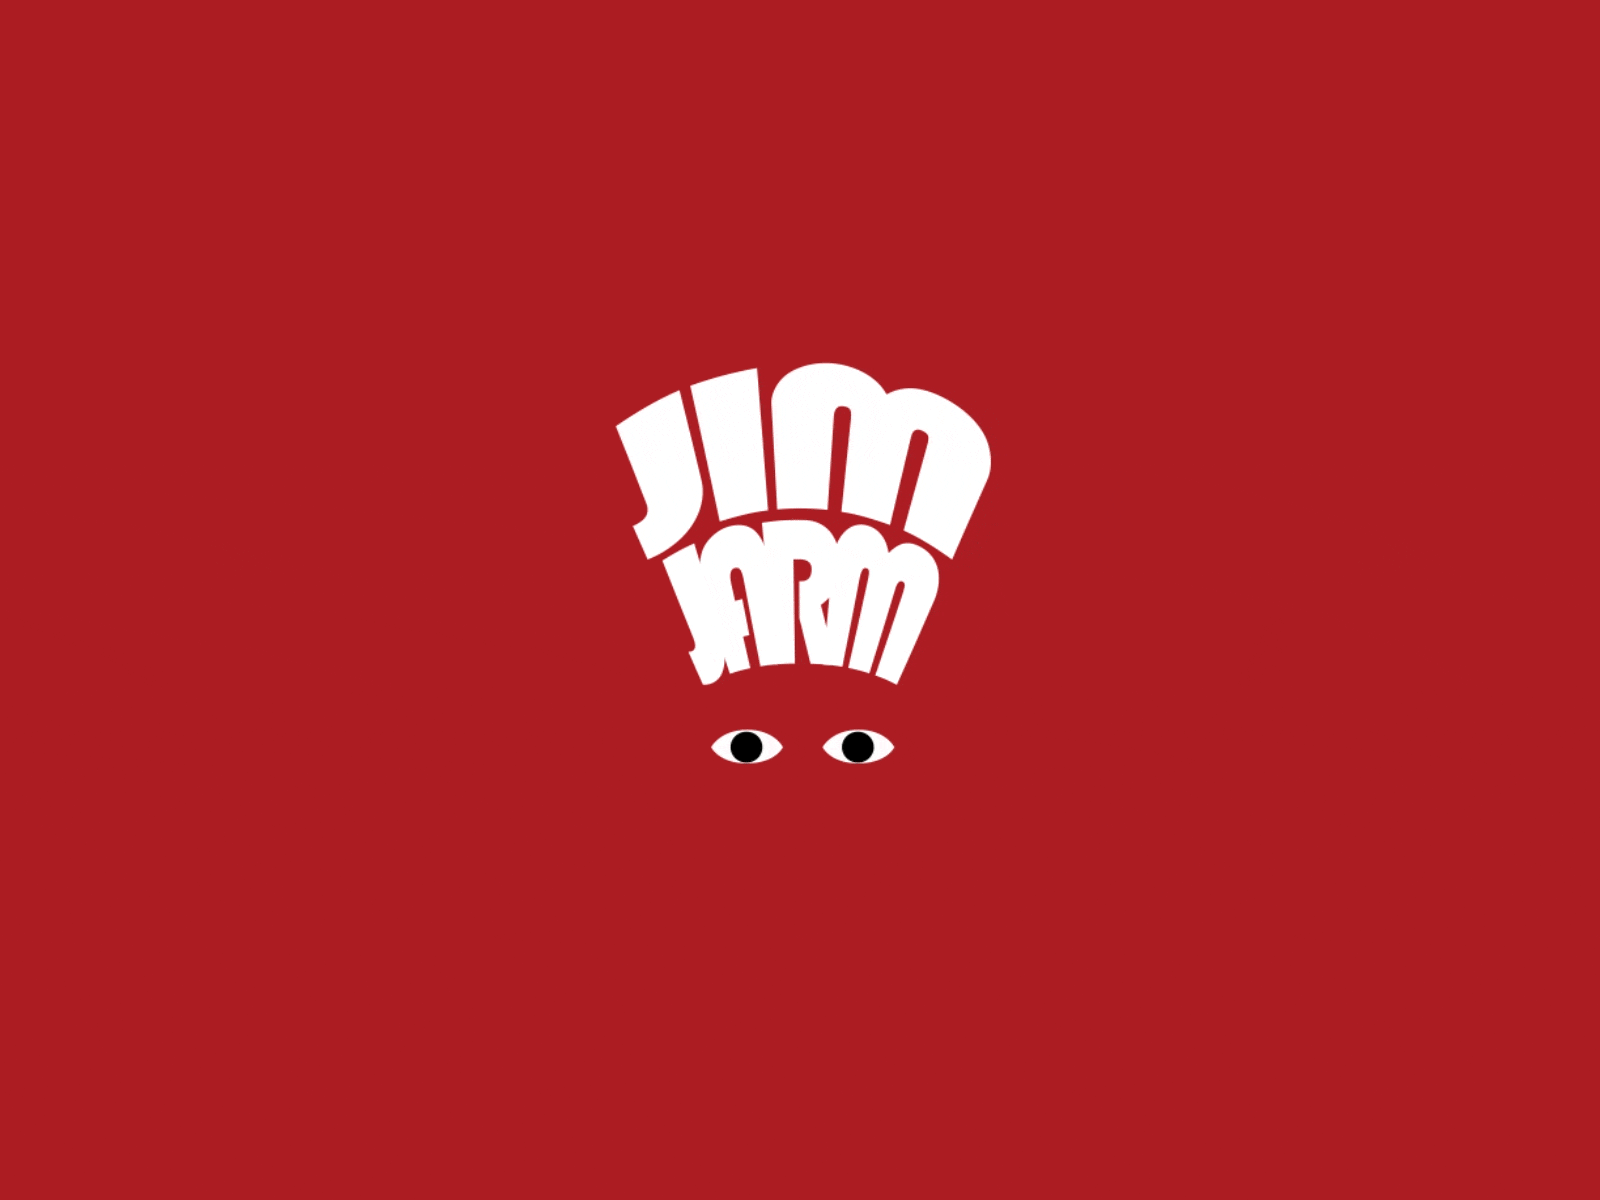 Jim Jarm Film Fest action animation camera character eyes film film festival letters logo playful logo red